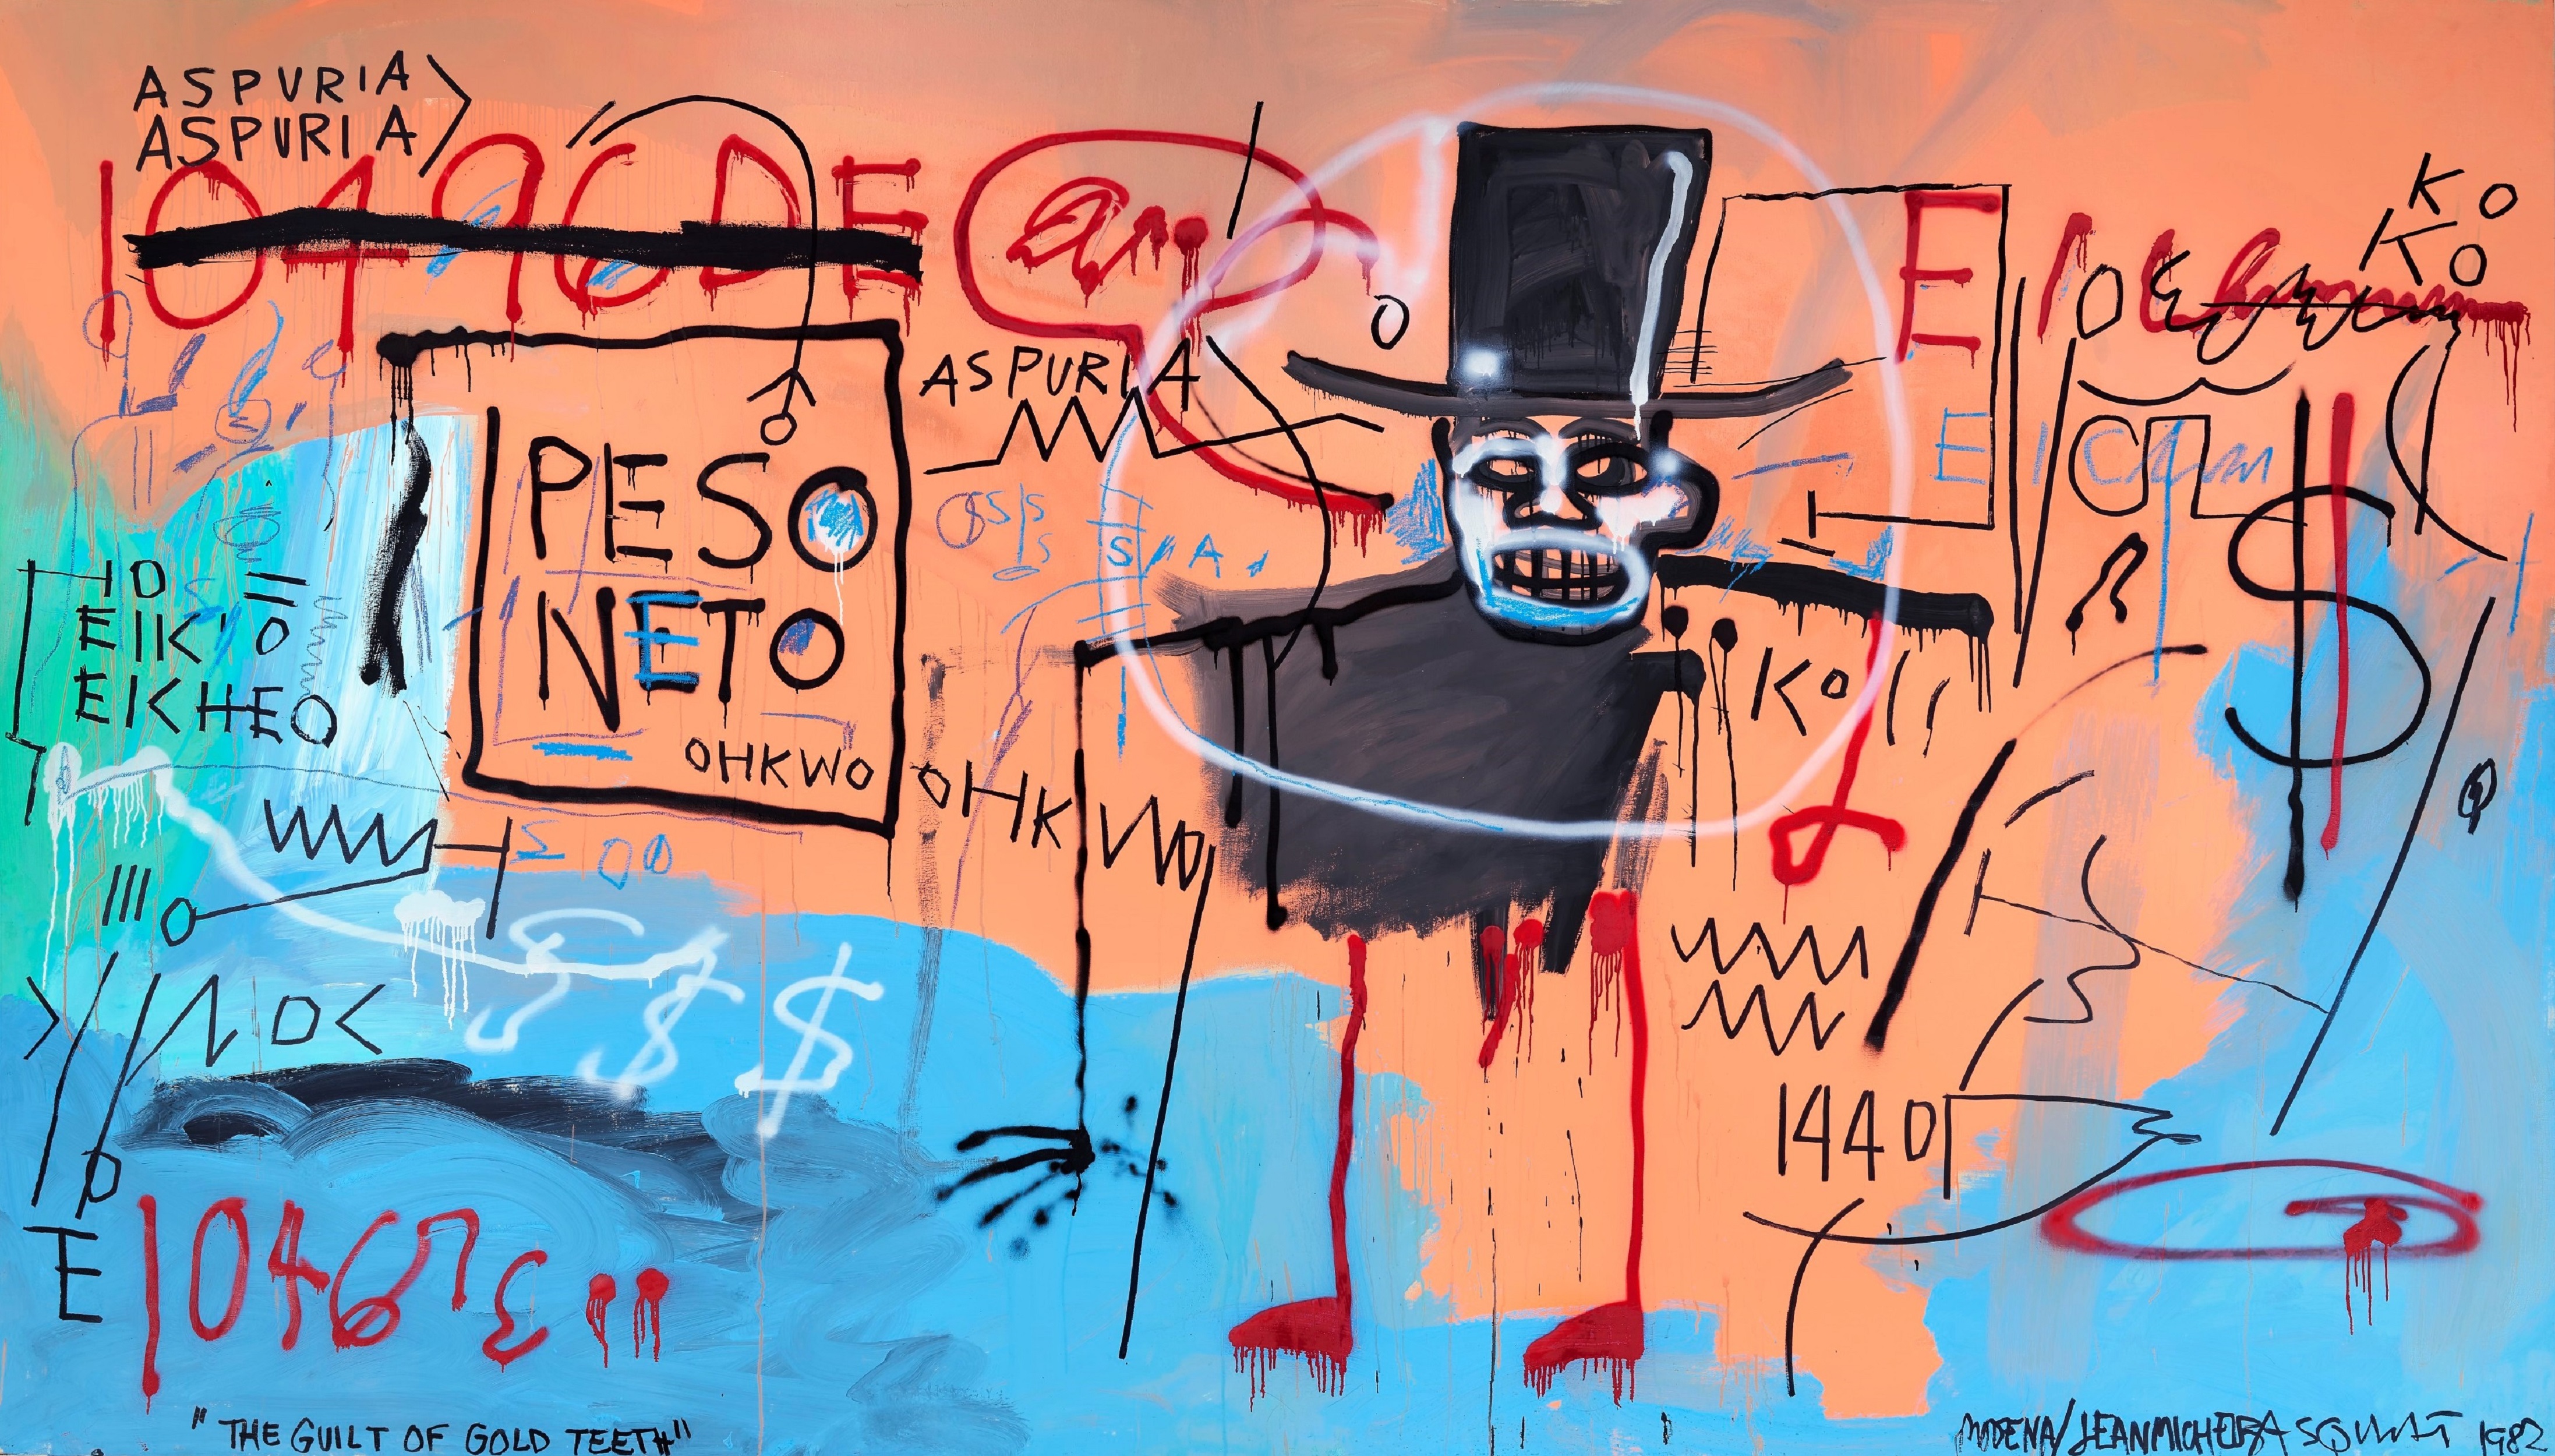 Basquiat in Modena